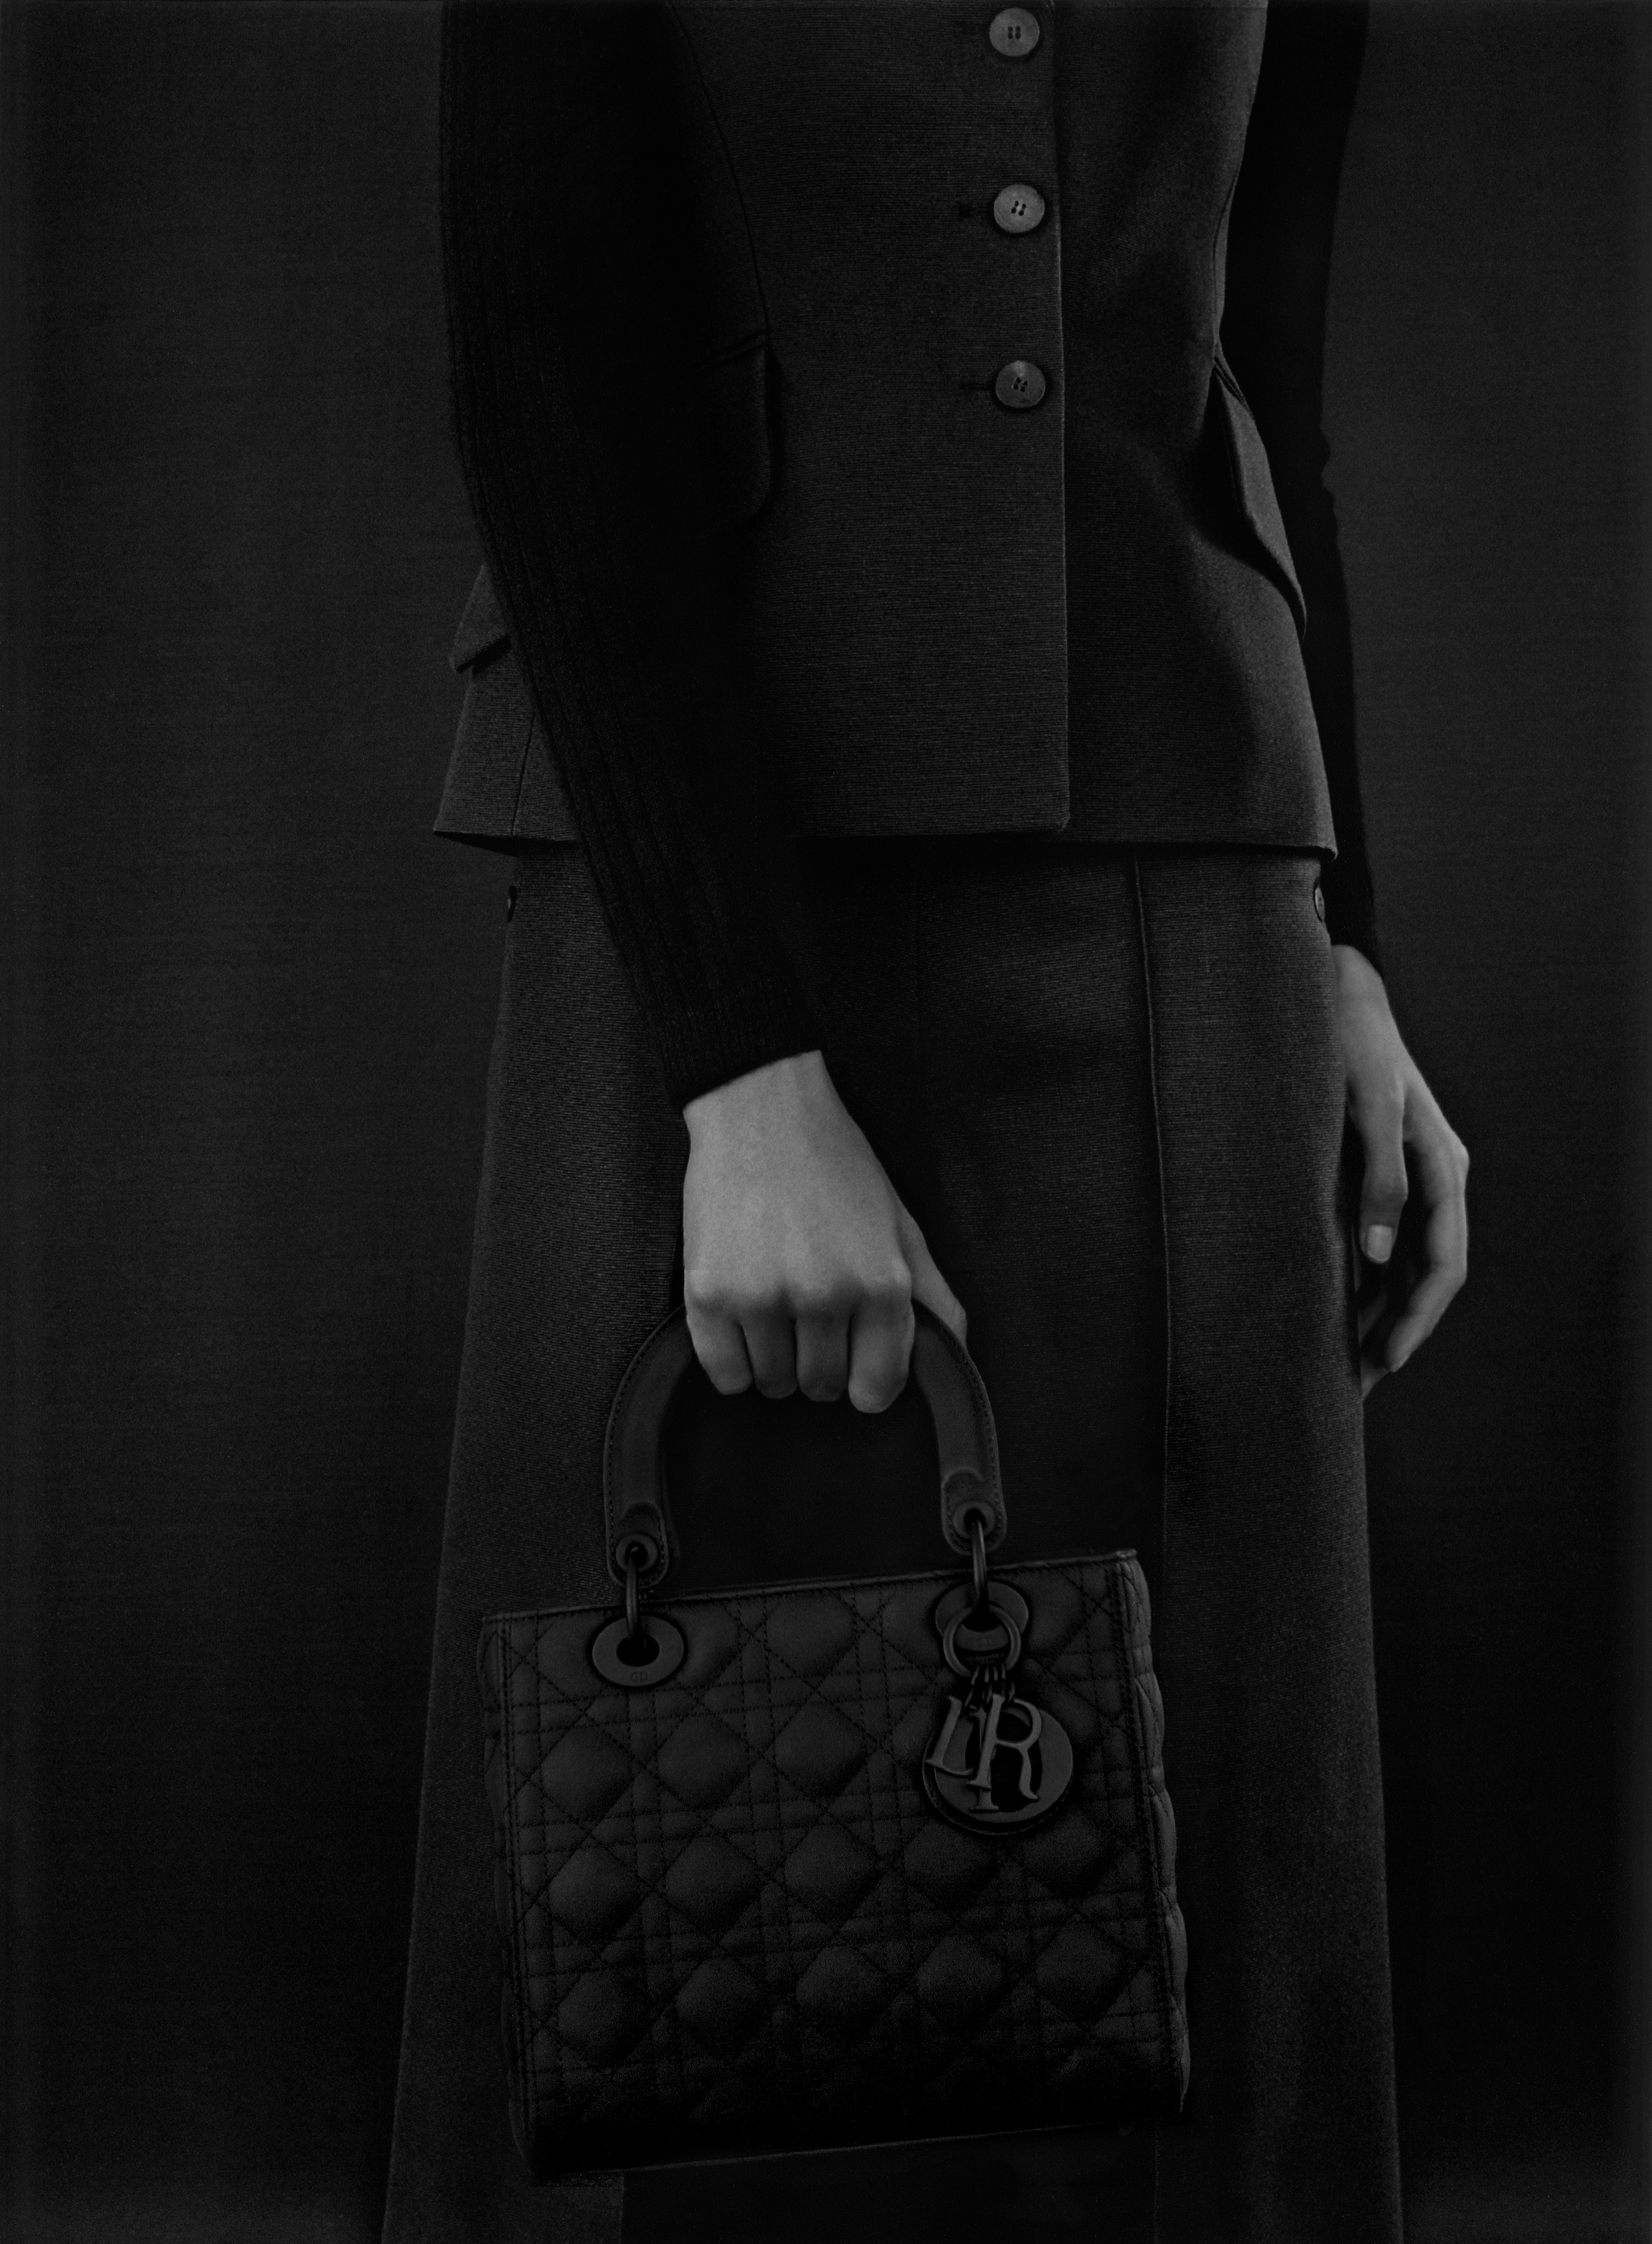 Dior Releases Saddle Bag in Ultra-Matte Finish